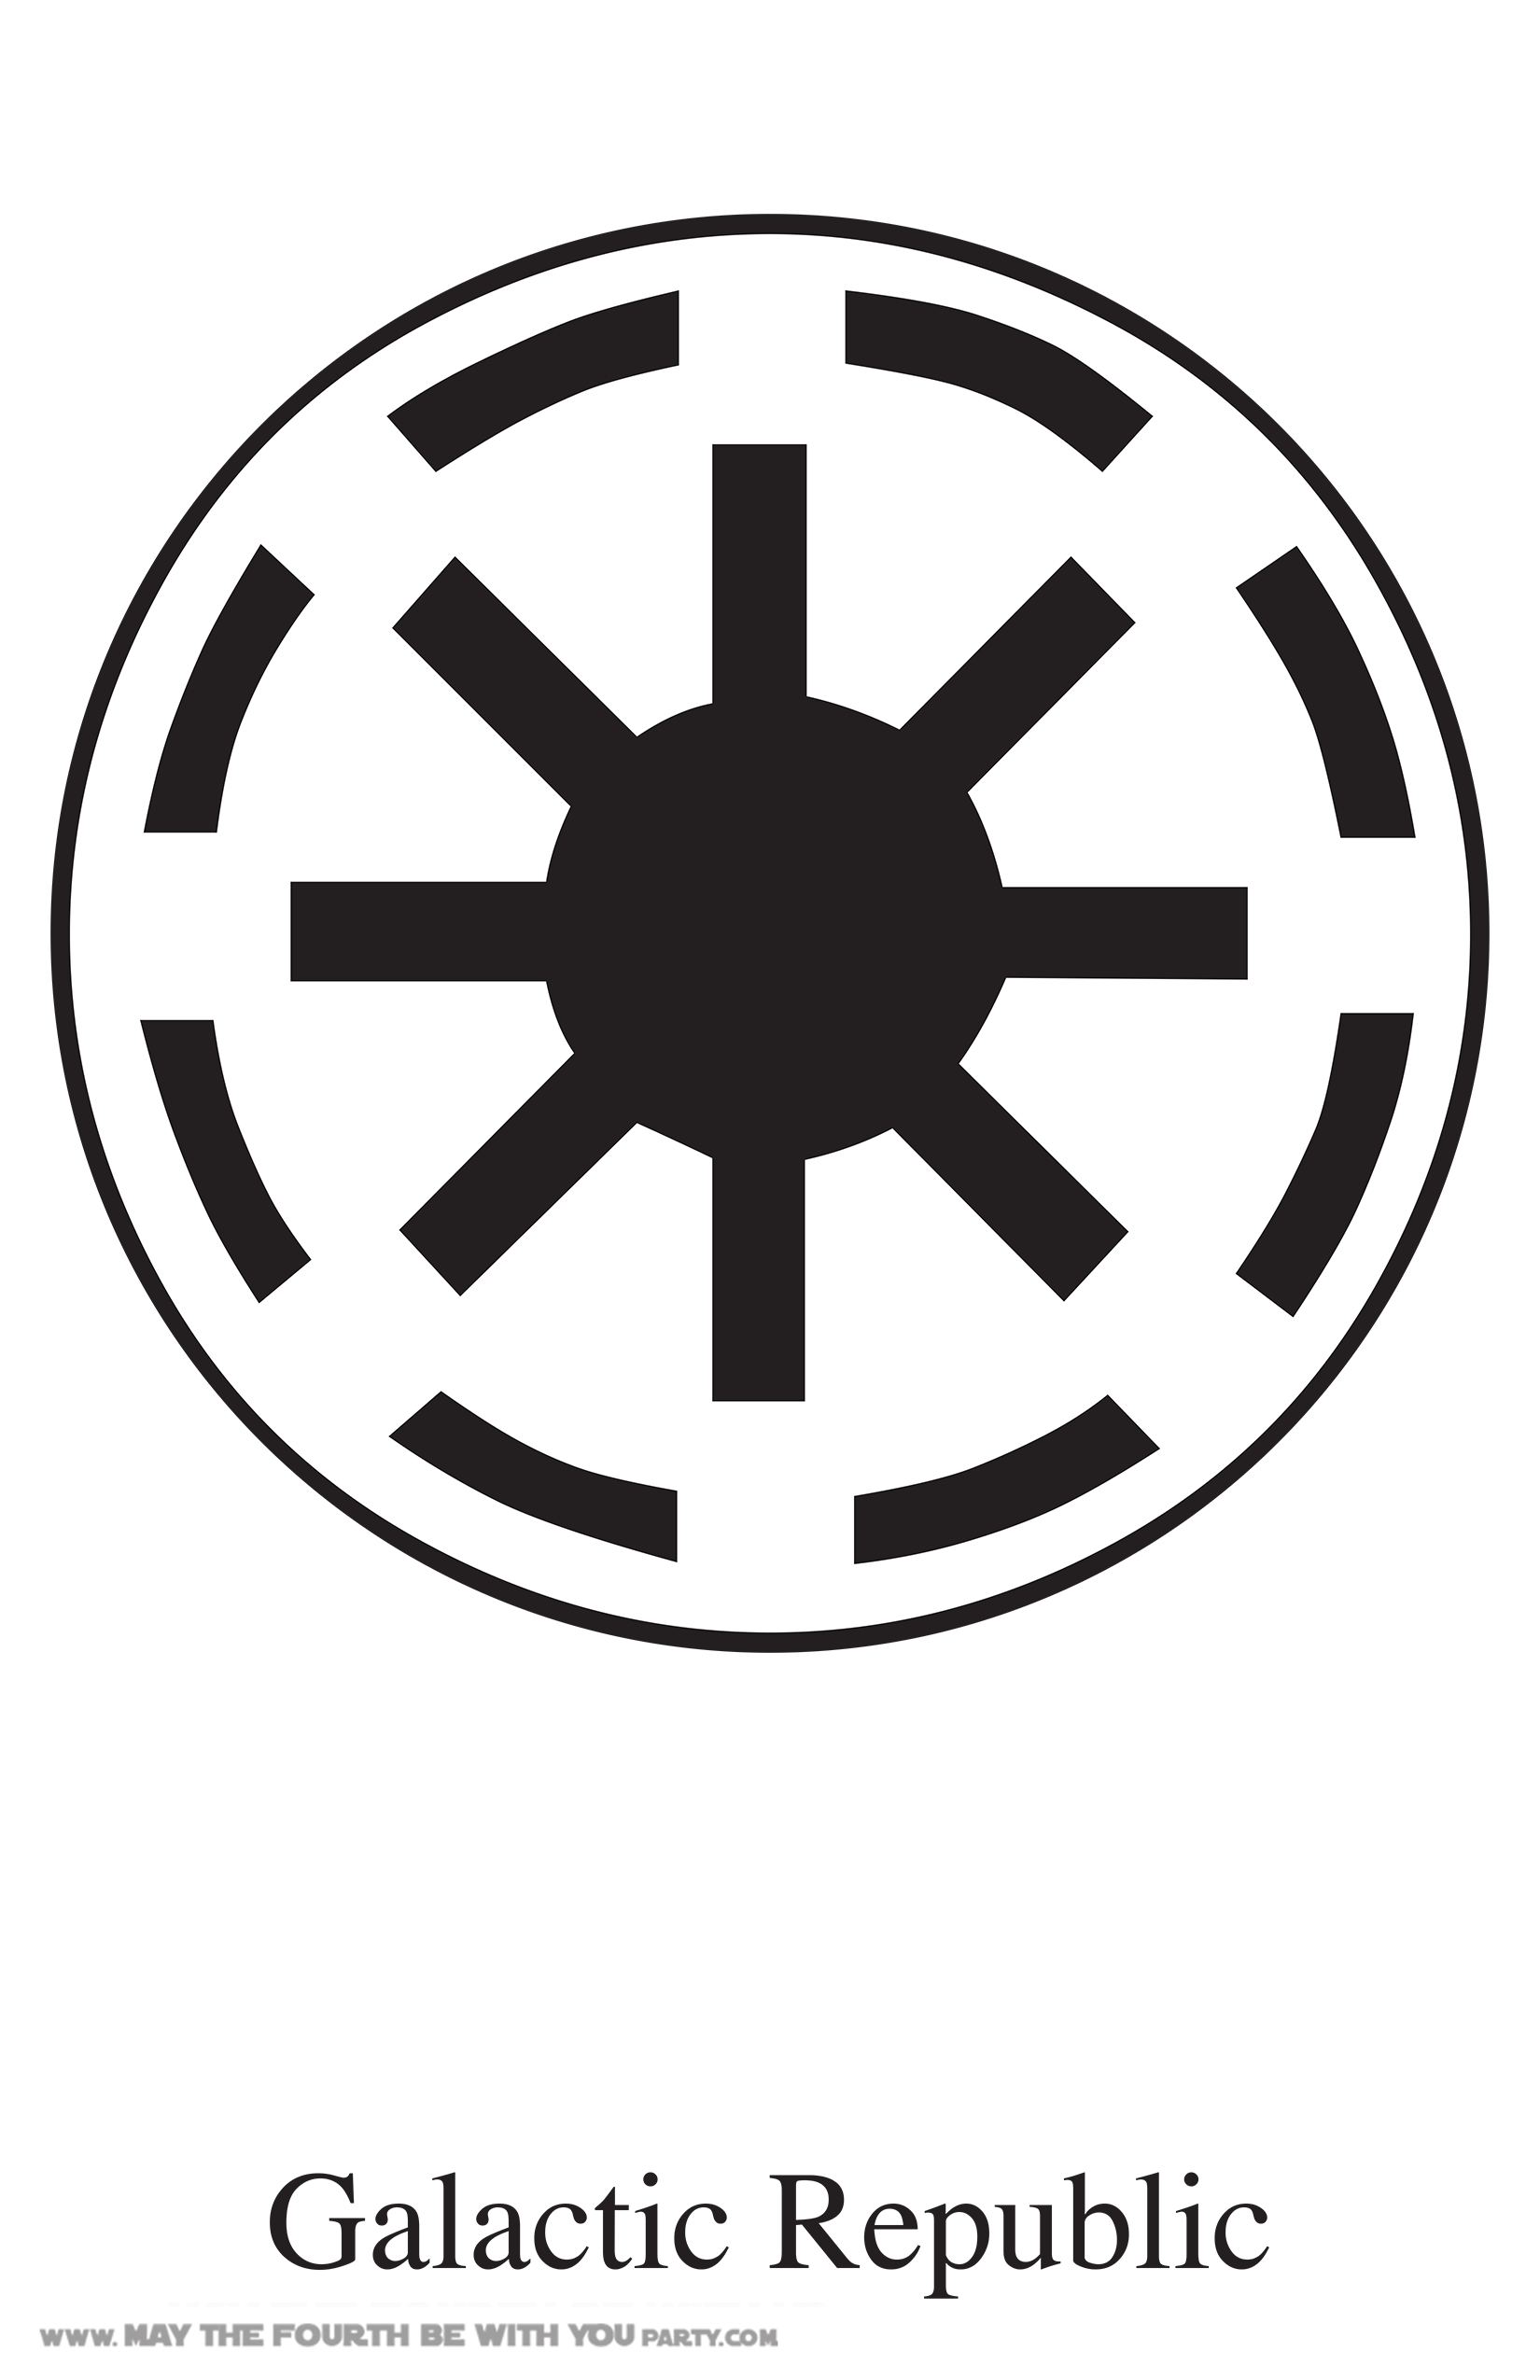 star wars empire icon